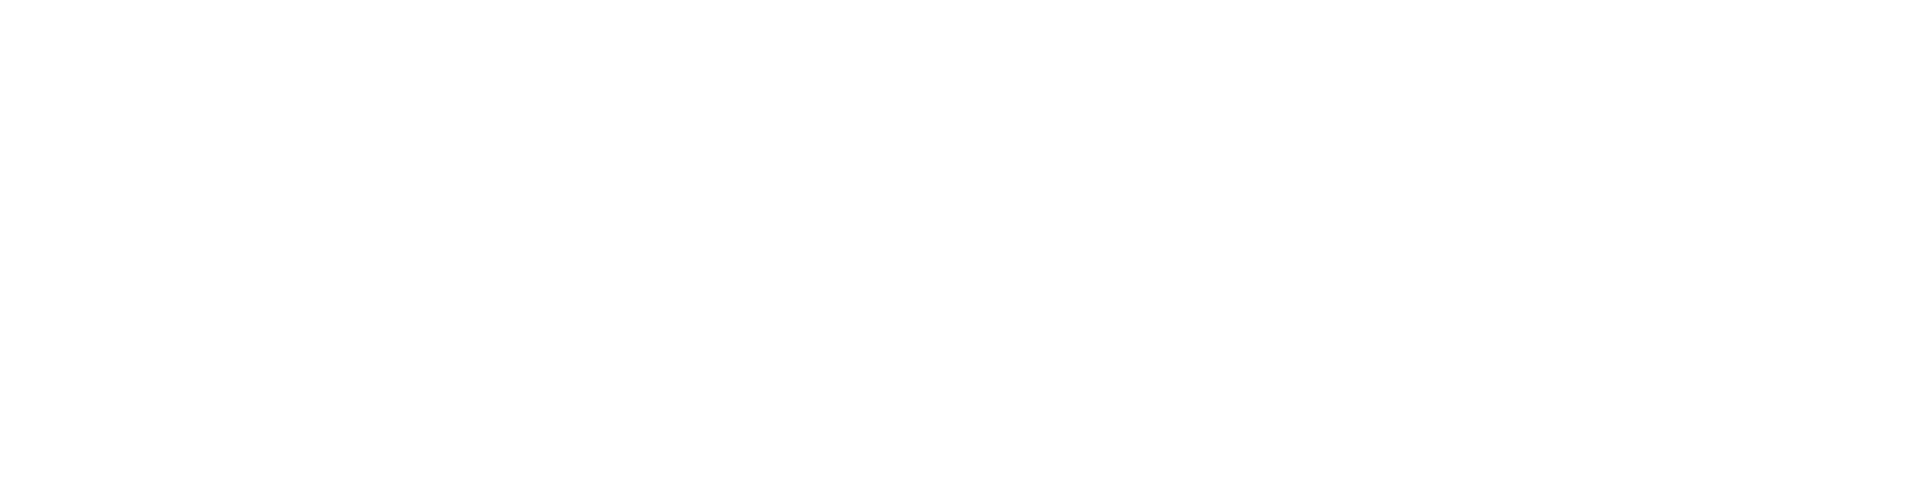 human-life-international-white-logo